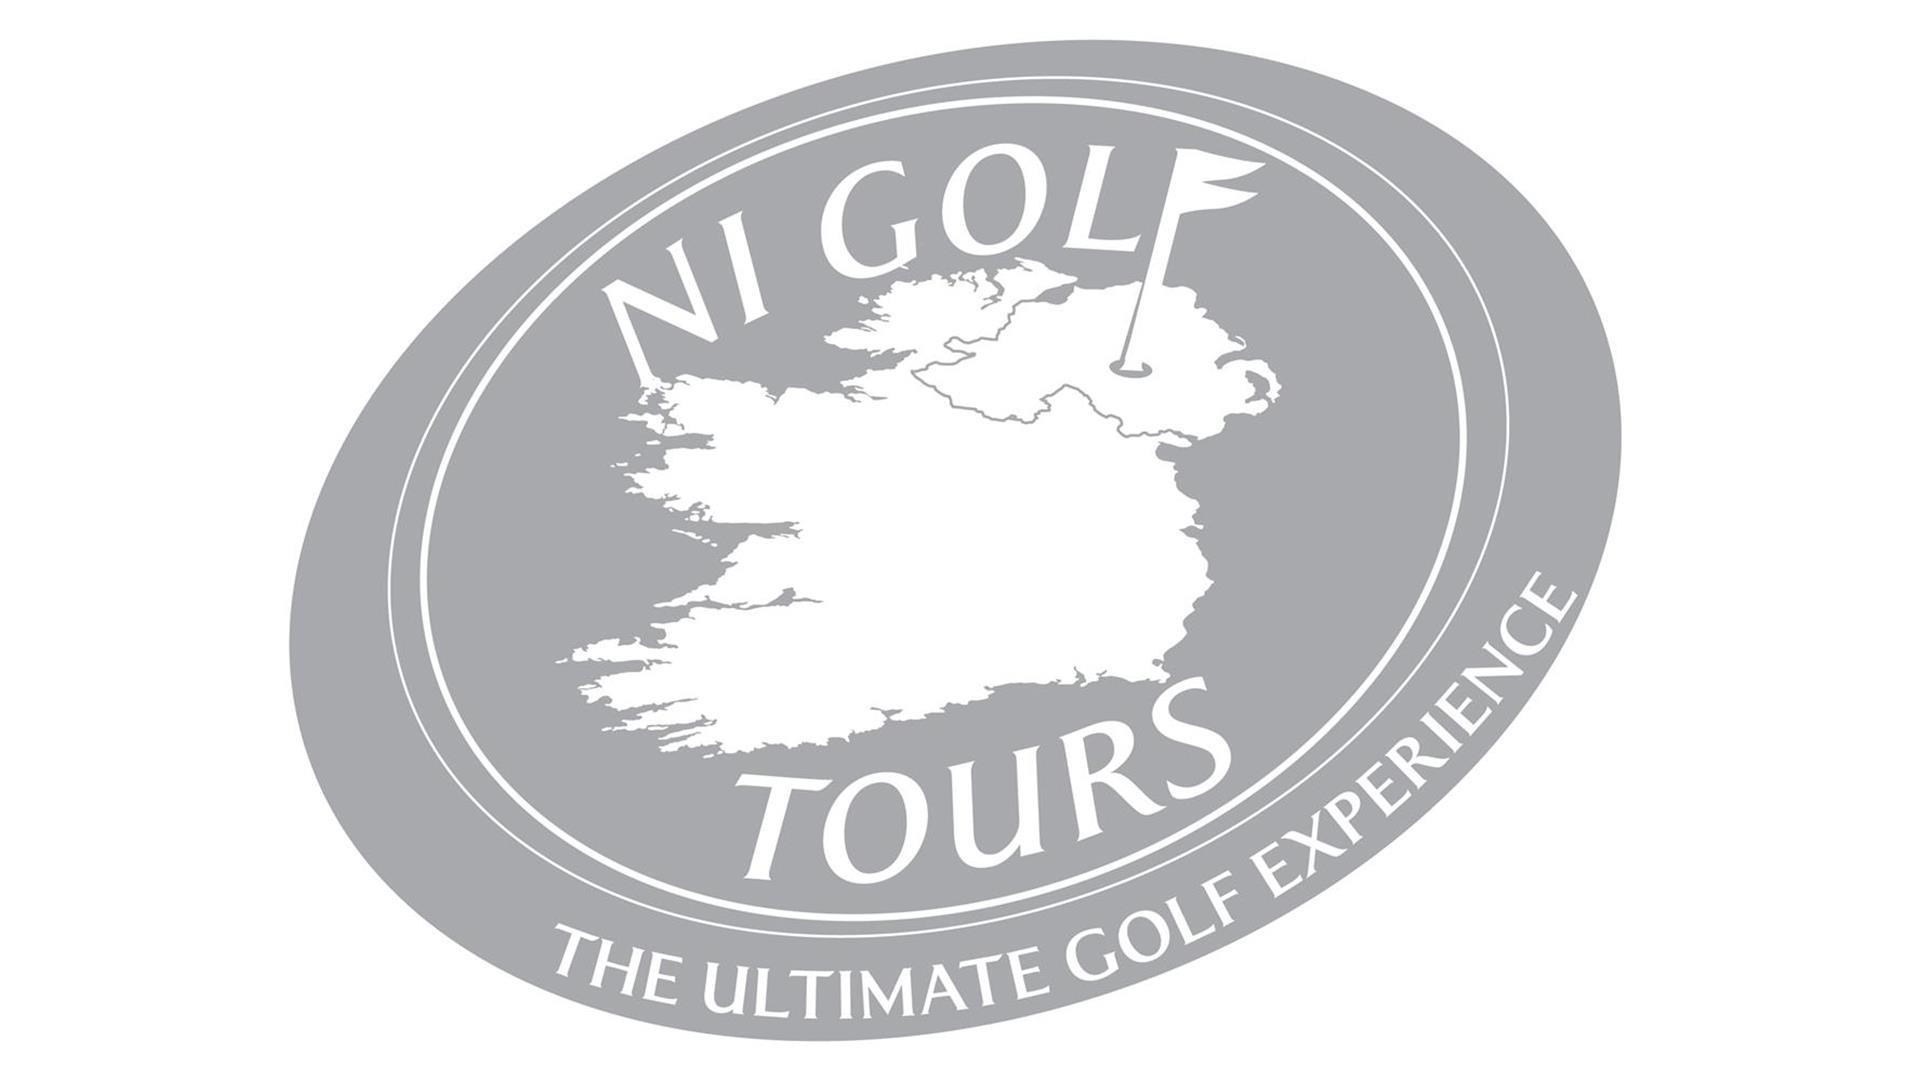 NI Golf Tours